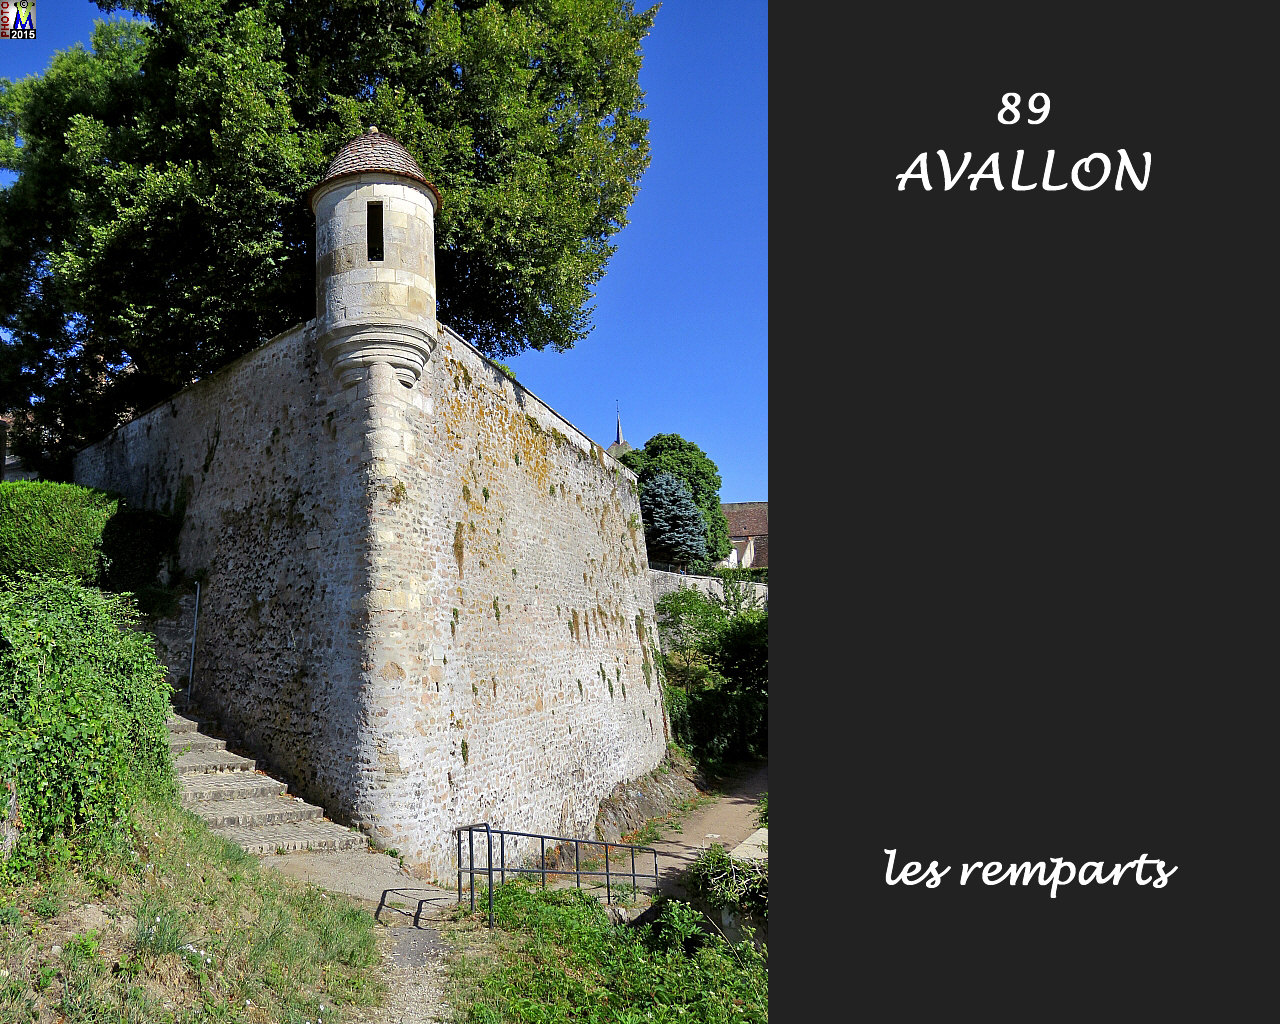 89AVALLON-remparts_104.jpg